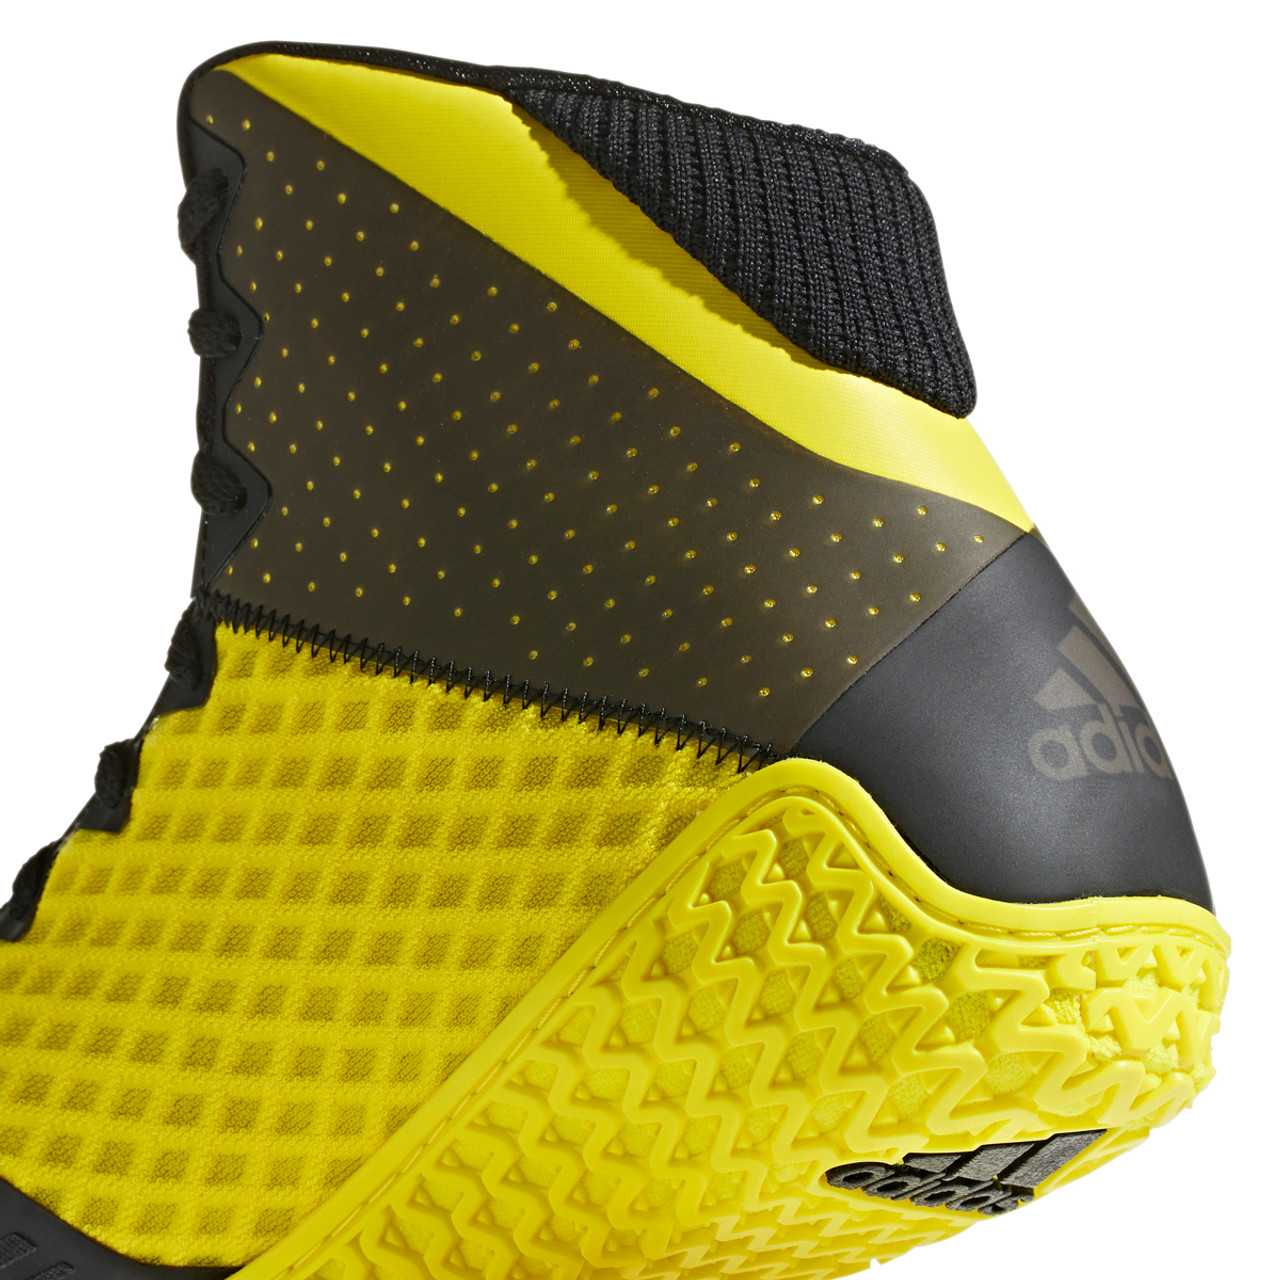 Adidas Mat Wizard 4 Yellow & Black Wrestling Shoes